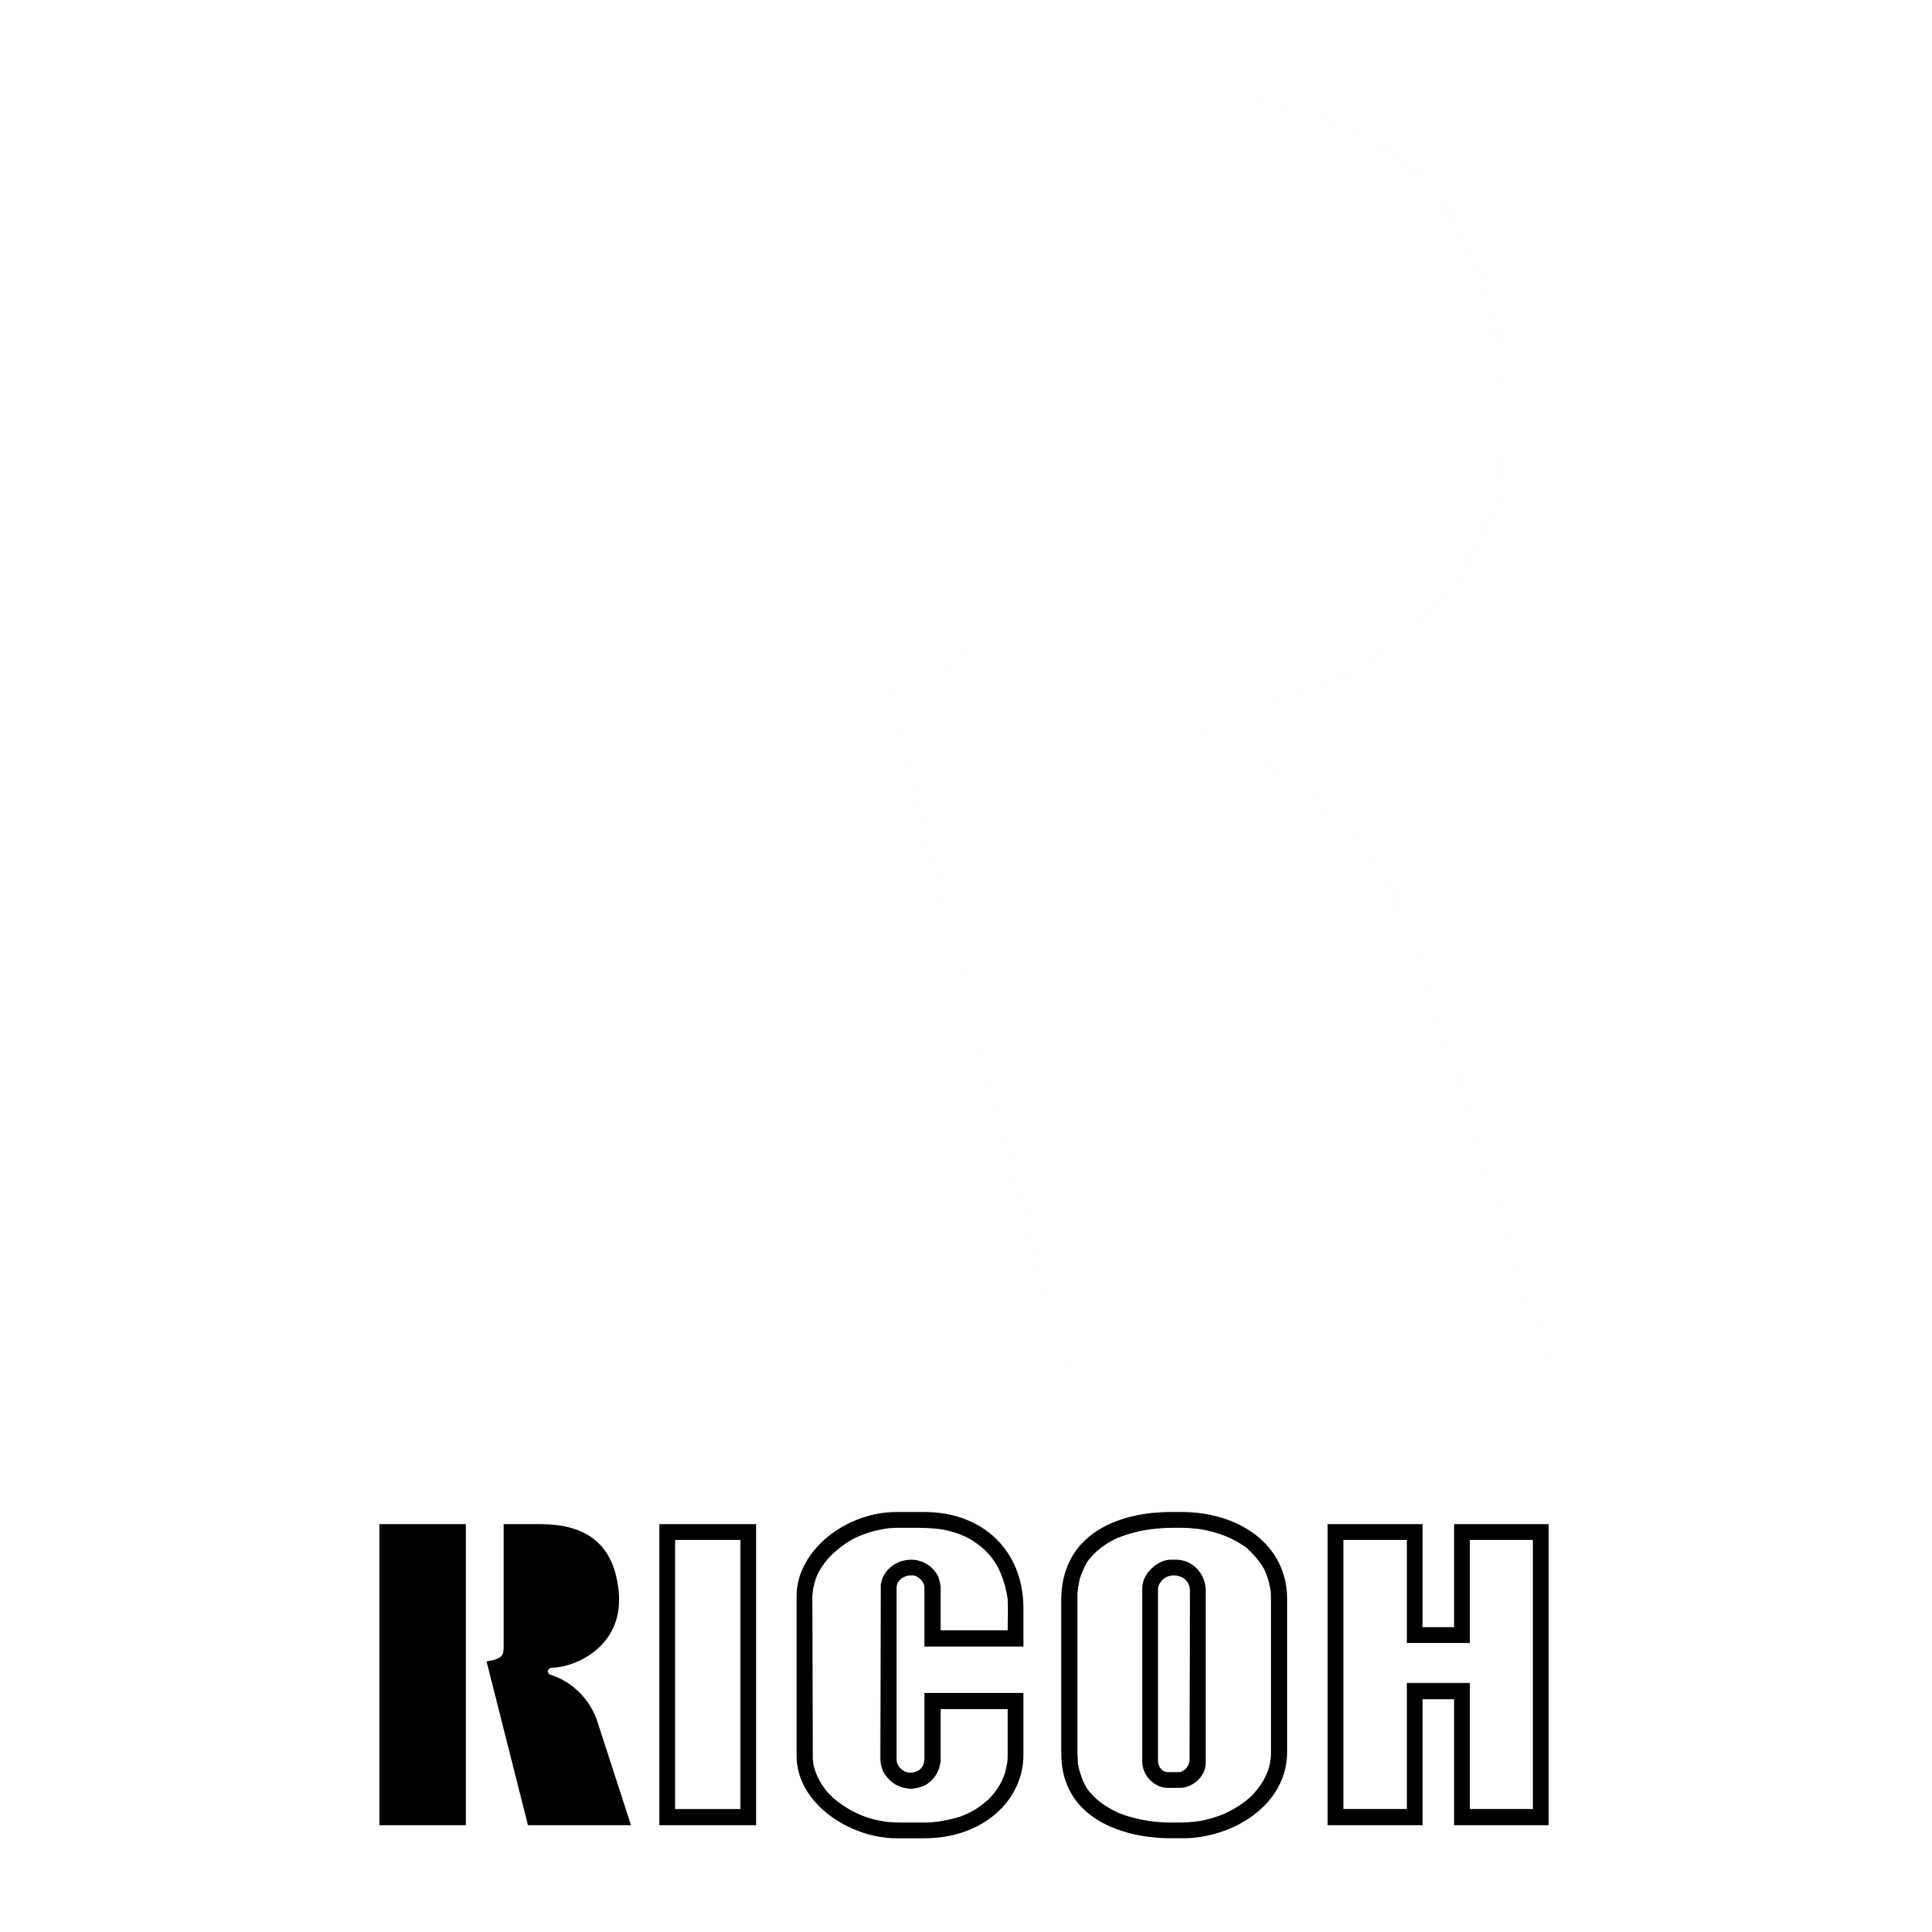 Ricoh Logo PNG Transparent & SVG Vector.